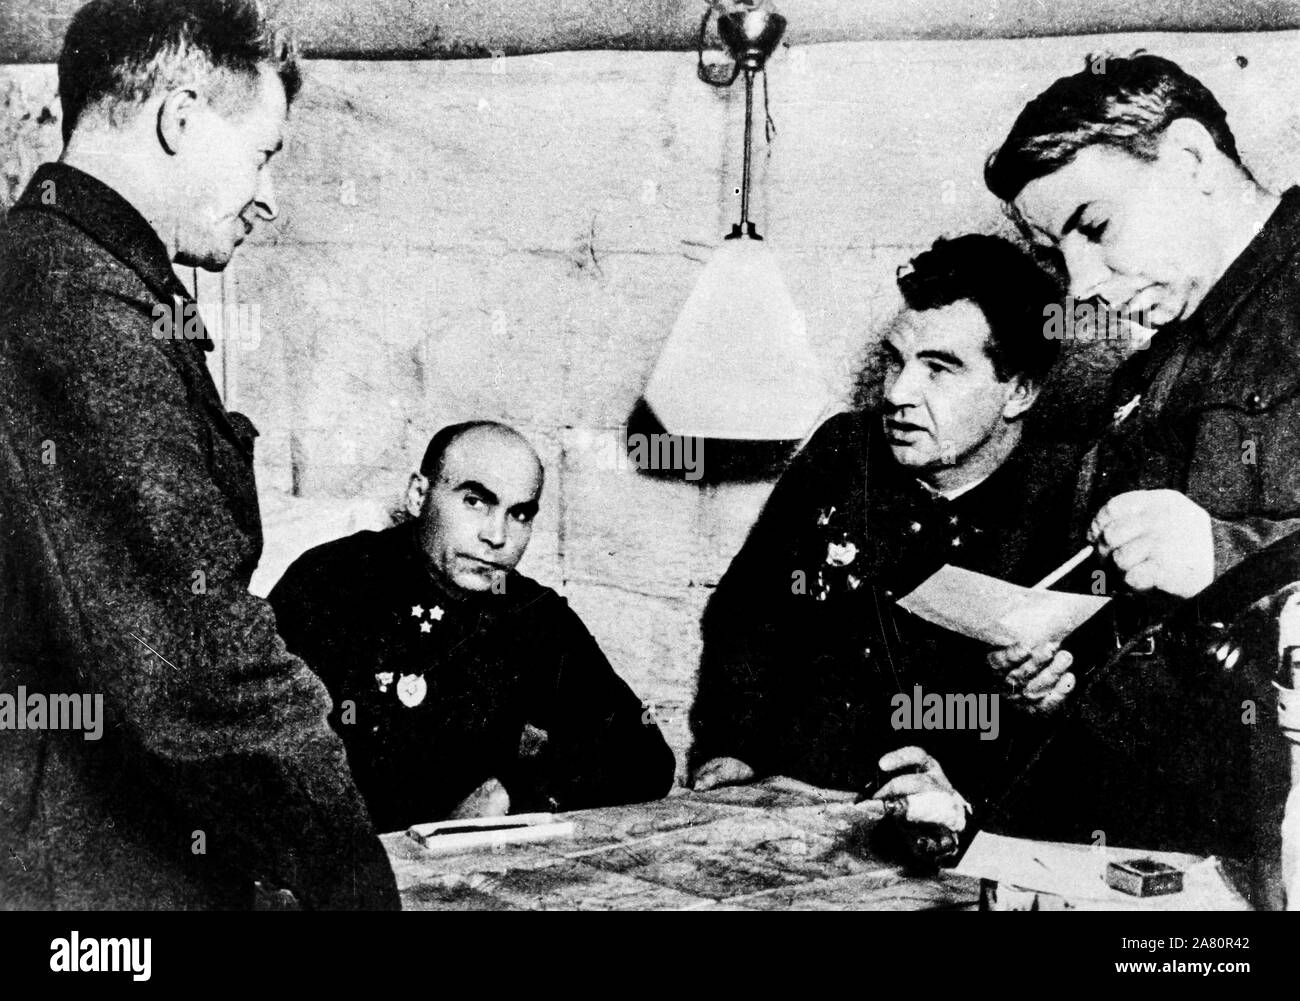 nikolaj krylov, vasilij cujkov, kuzma gurov, aleksandr rodimcev, headquarters of the red army, second world war, stalingrad 1942 Stock Photo